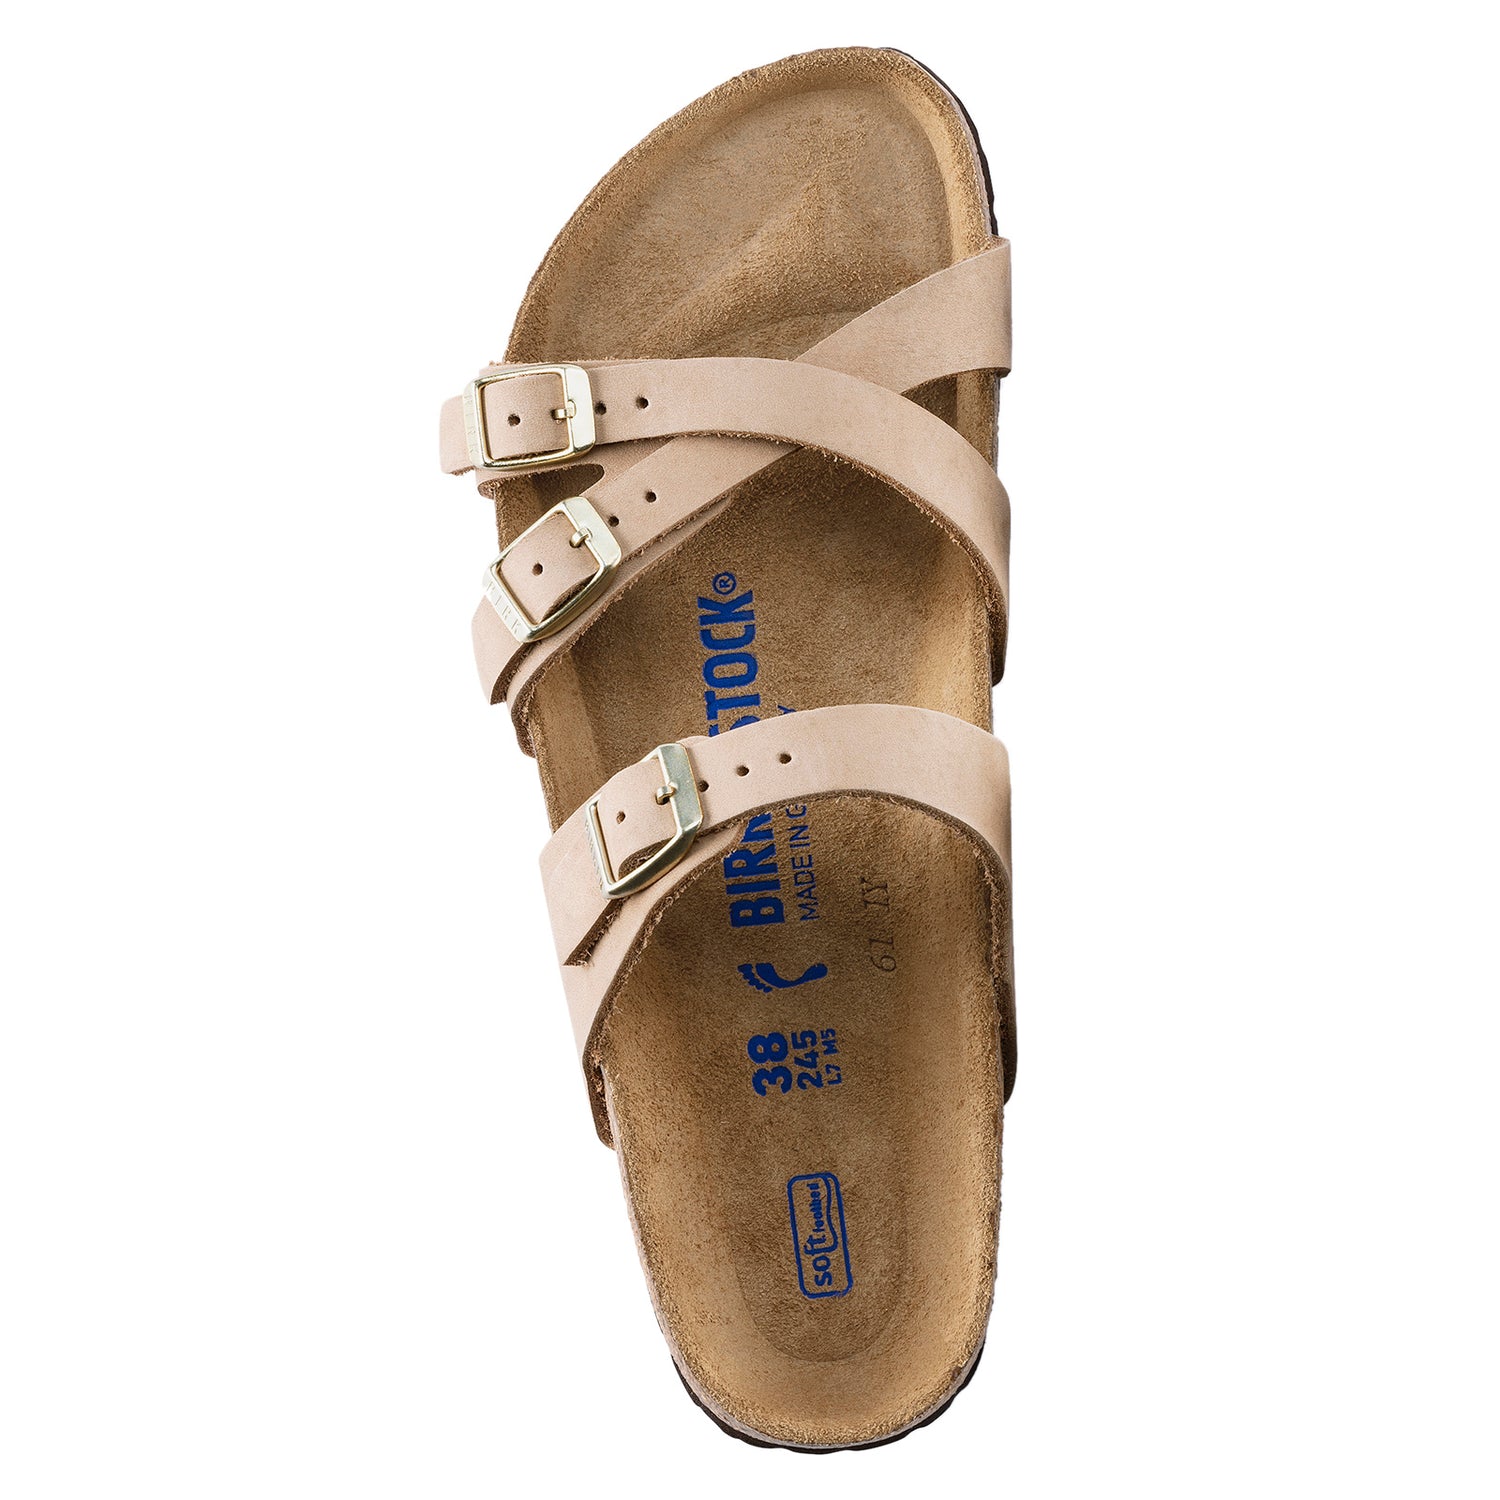 Peltz Shoes  Women's Birkenstock Franca Soft Footbed Sandal - Regular Width SAND 1022 956 R